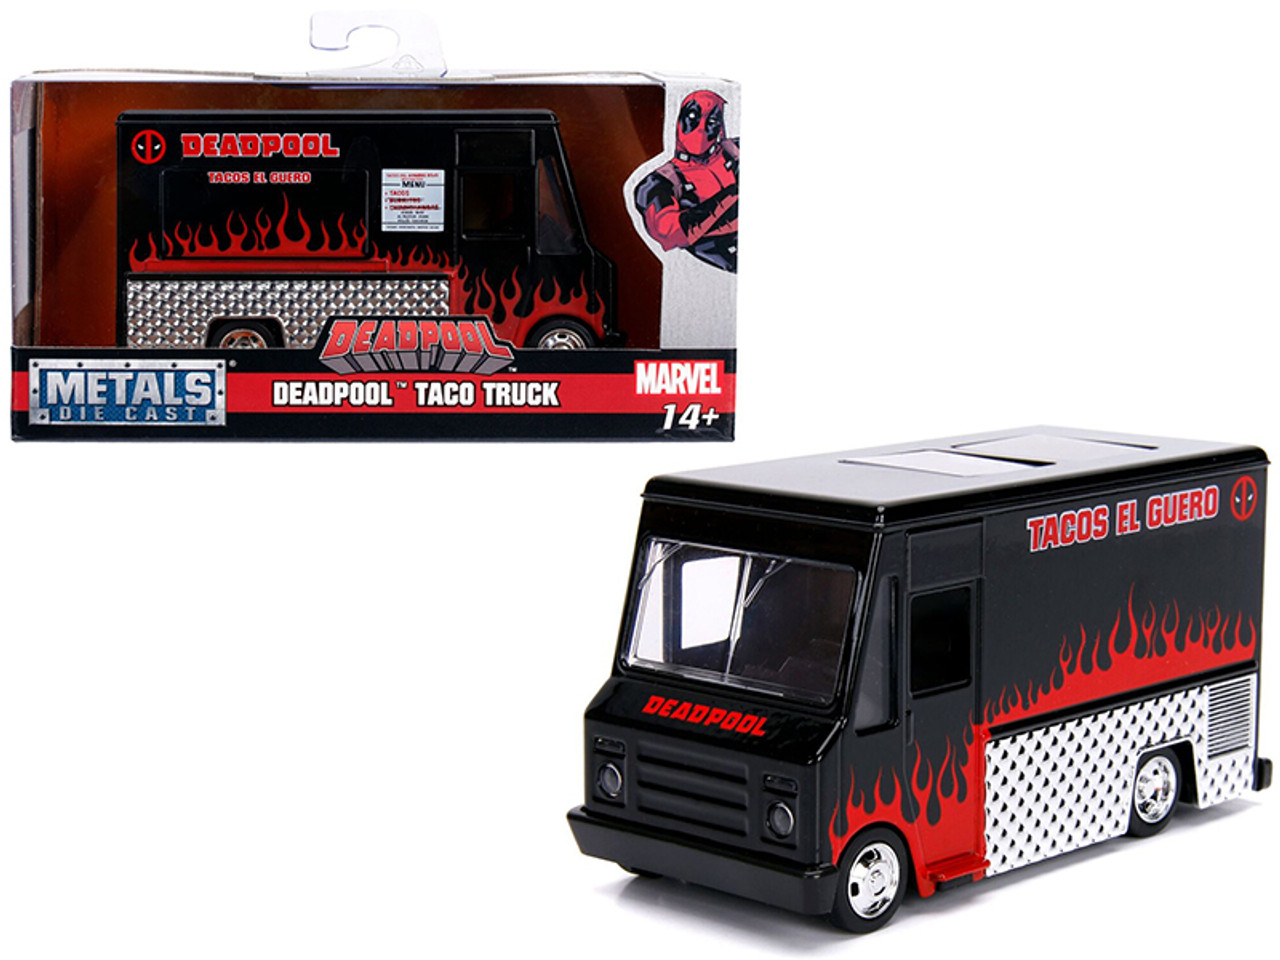 Deadpool Taco Truck Black "Marvel" Series 1/32 Diecast Model by Jada